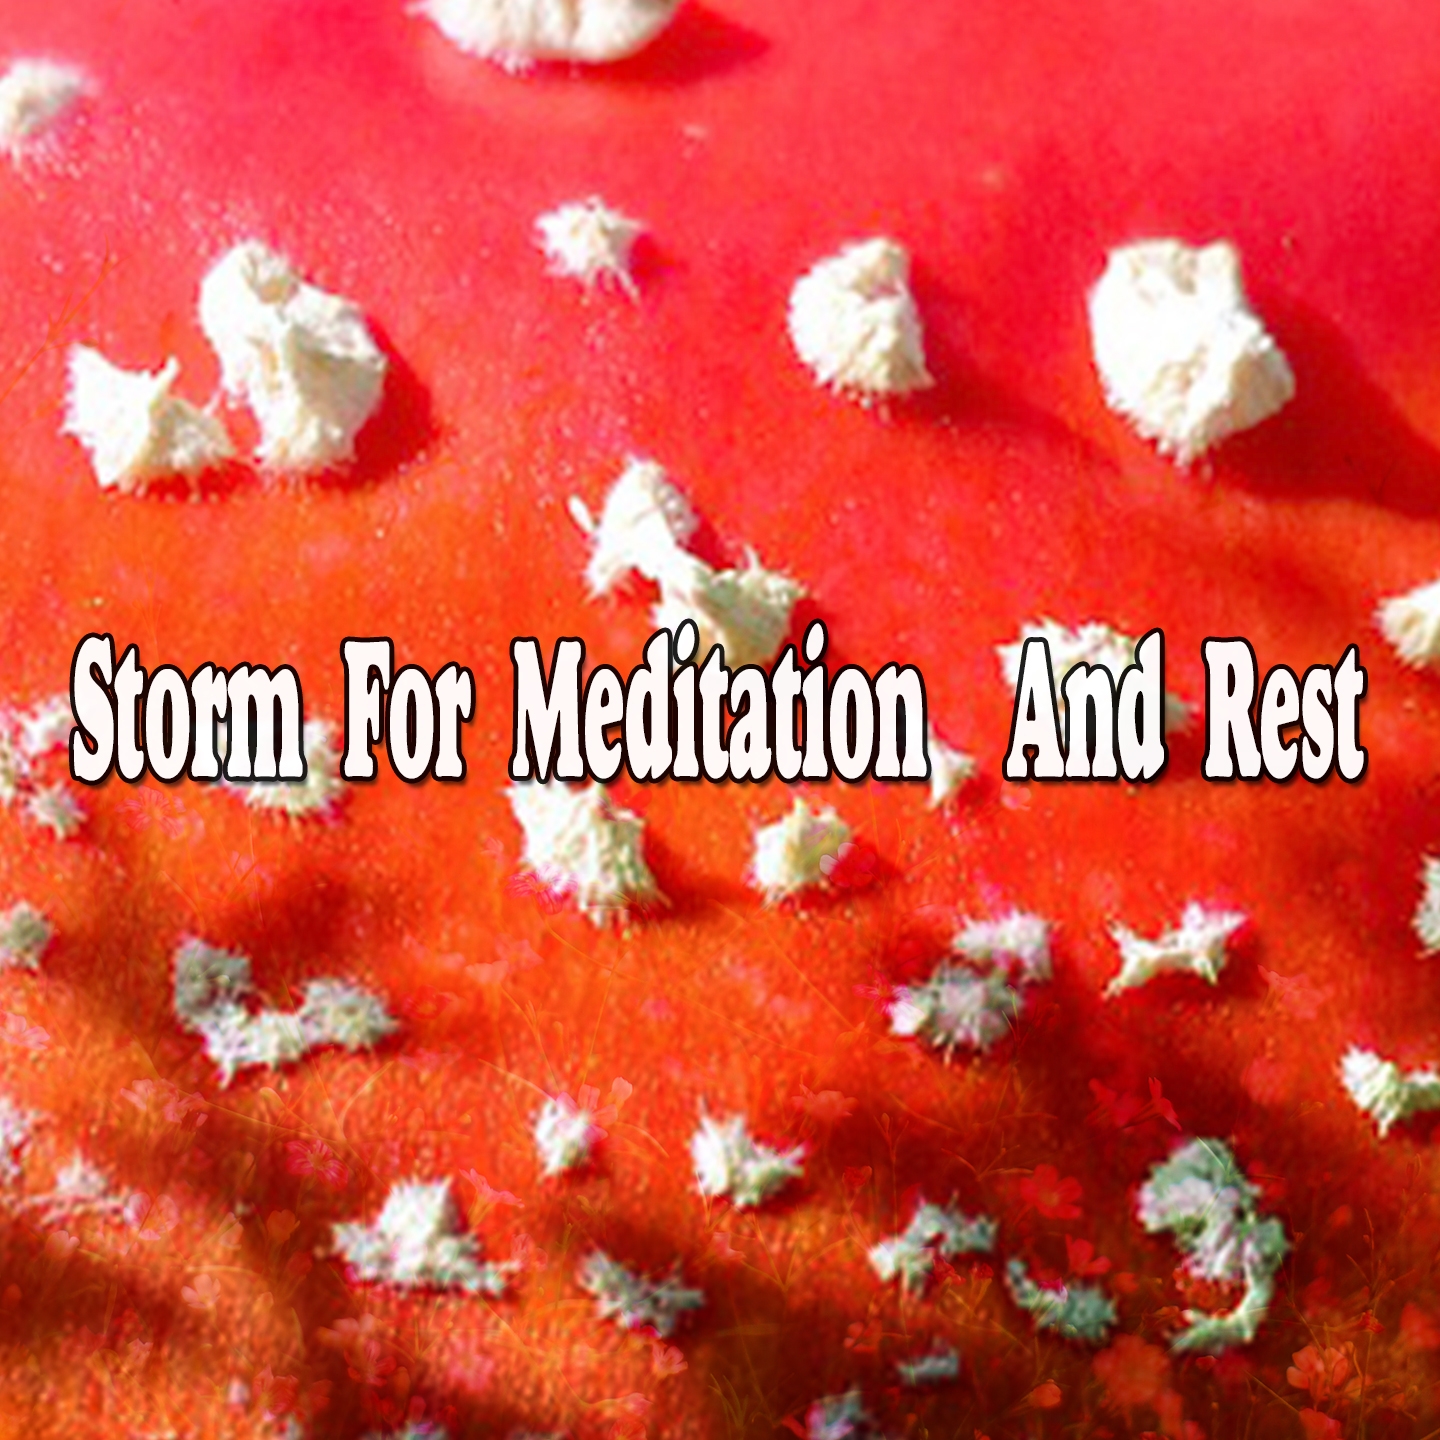 Storm For Meditation And Rest